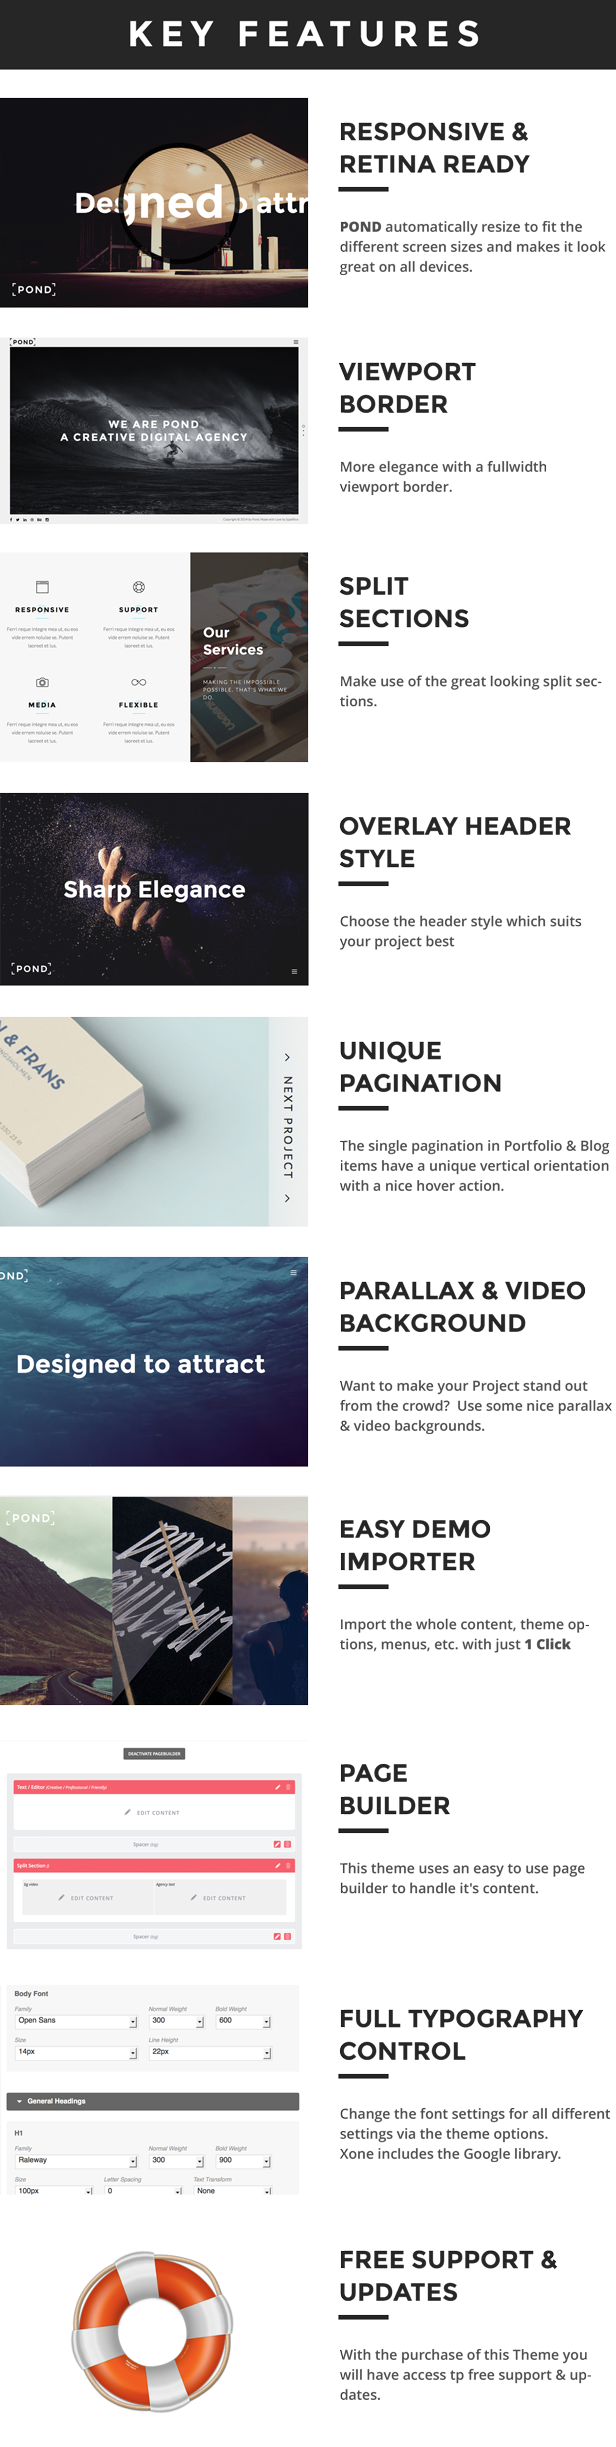 pond features - Pond - Creative Portfolio / Agency WordPress Theme